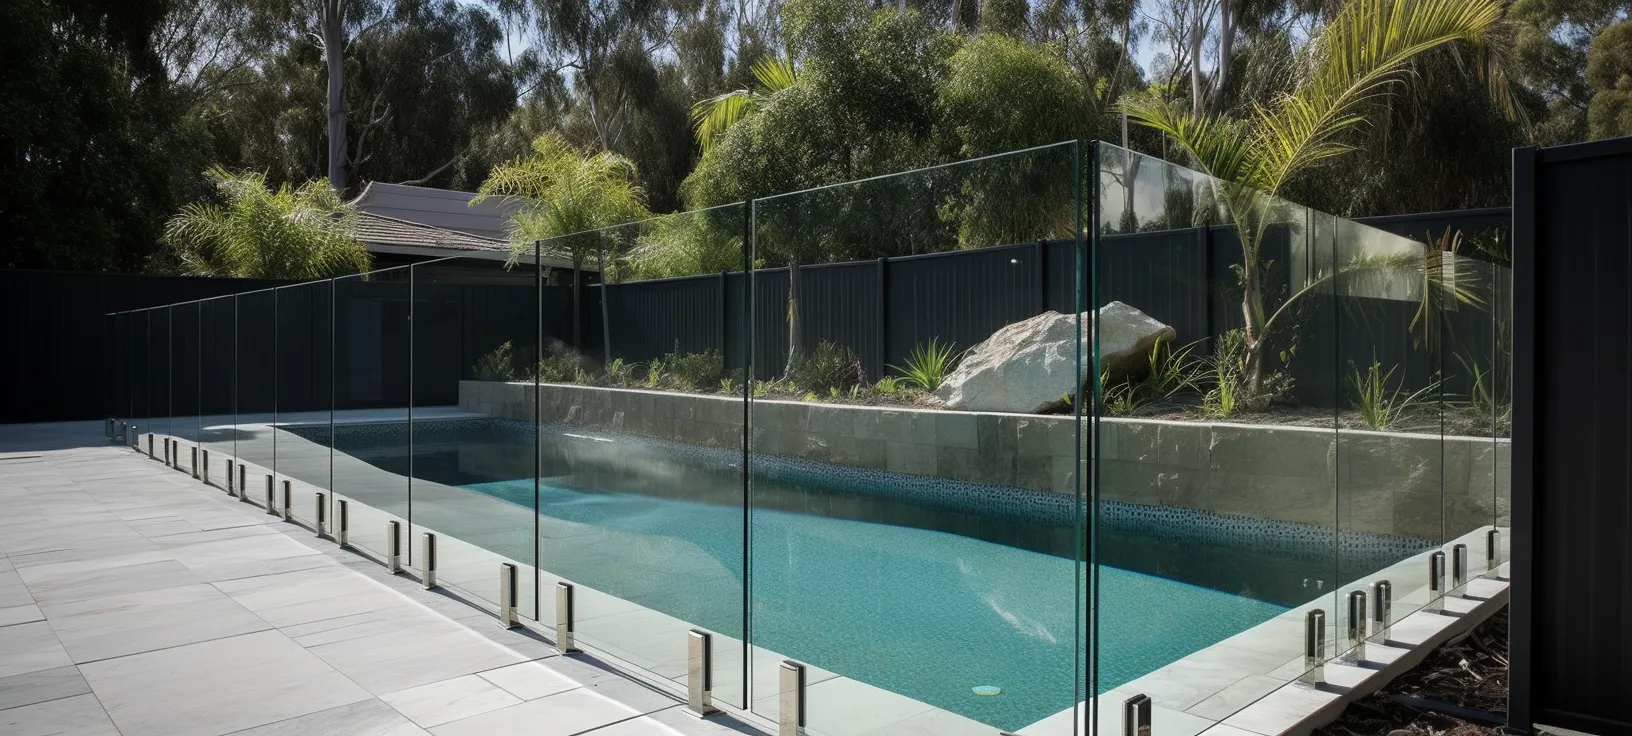 Backyard pool in Ballarat with glass fencing